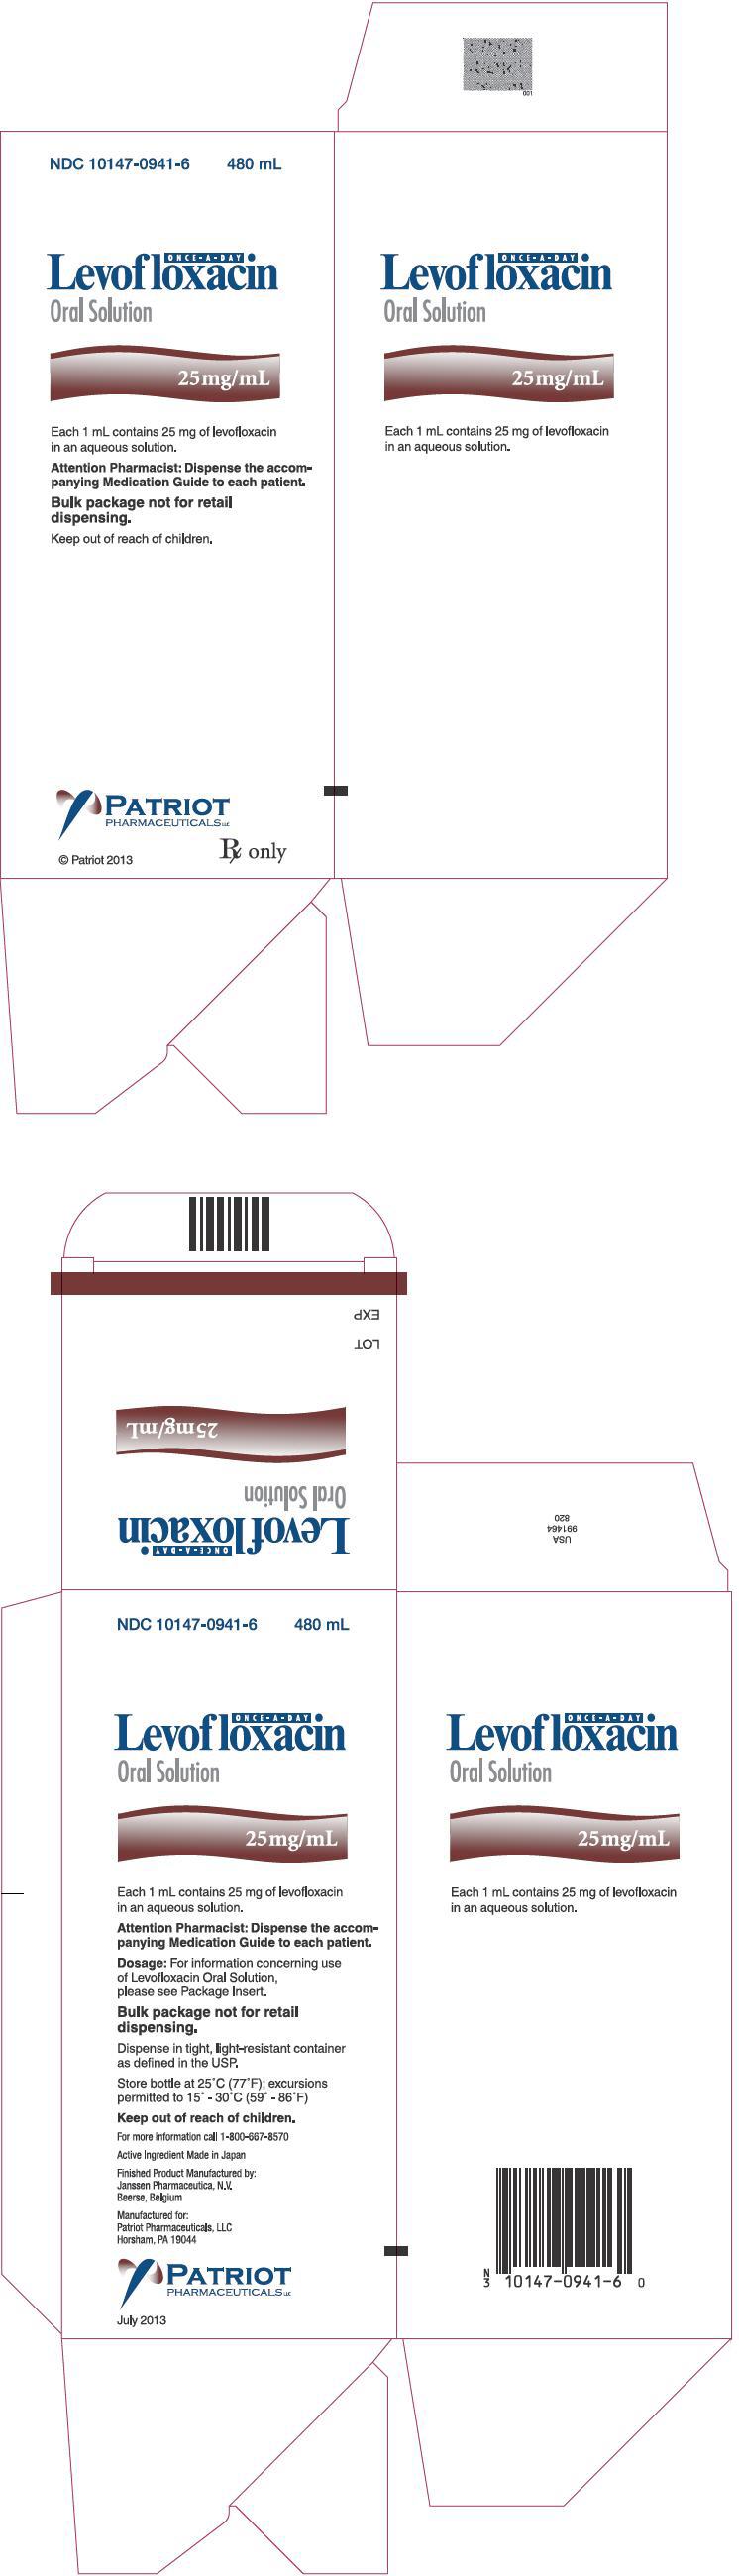 PRINCIPAL DISPLAY PANEL - 480 mL Bottle Carton